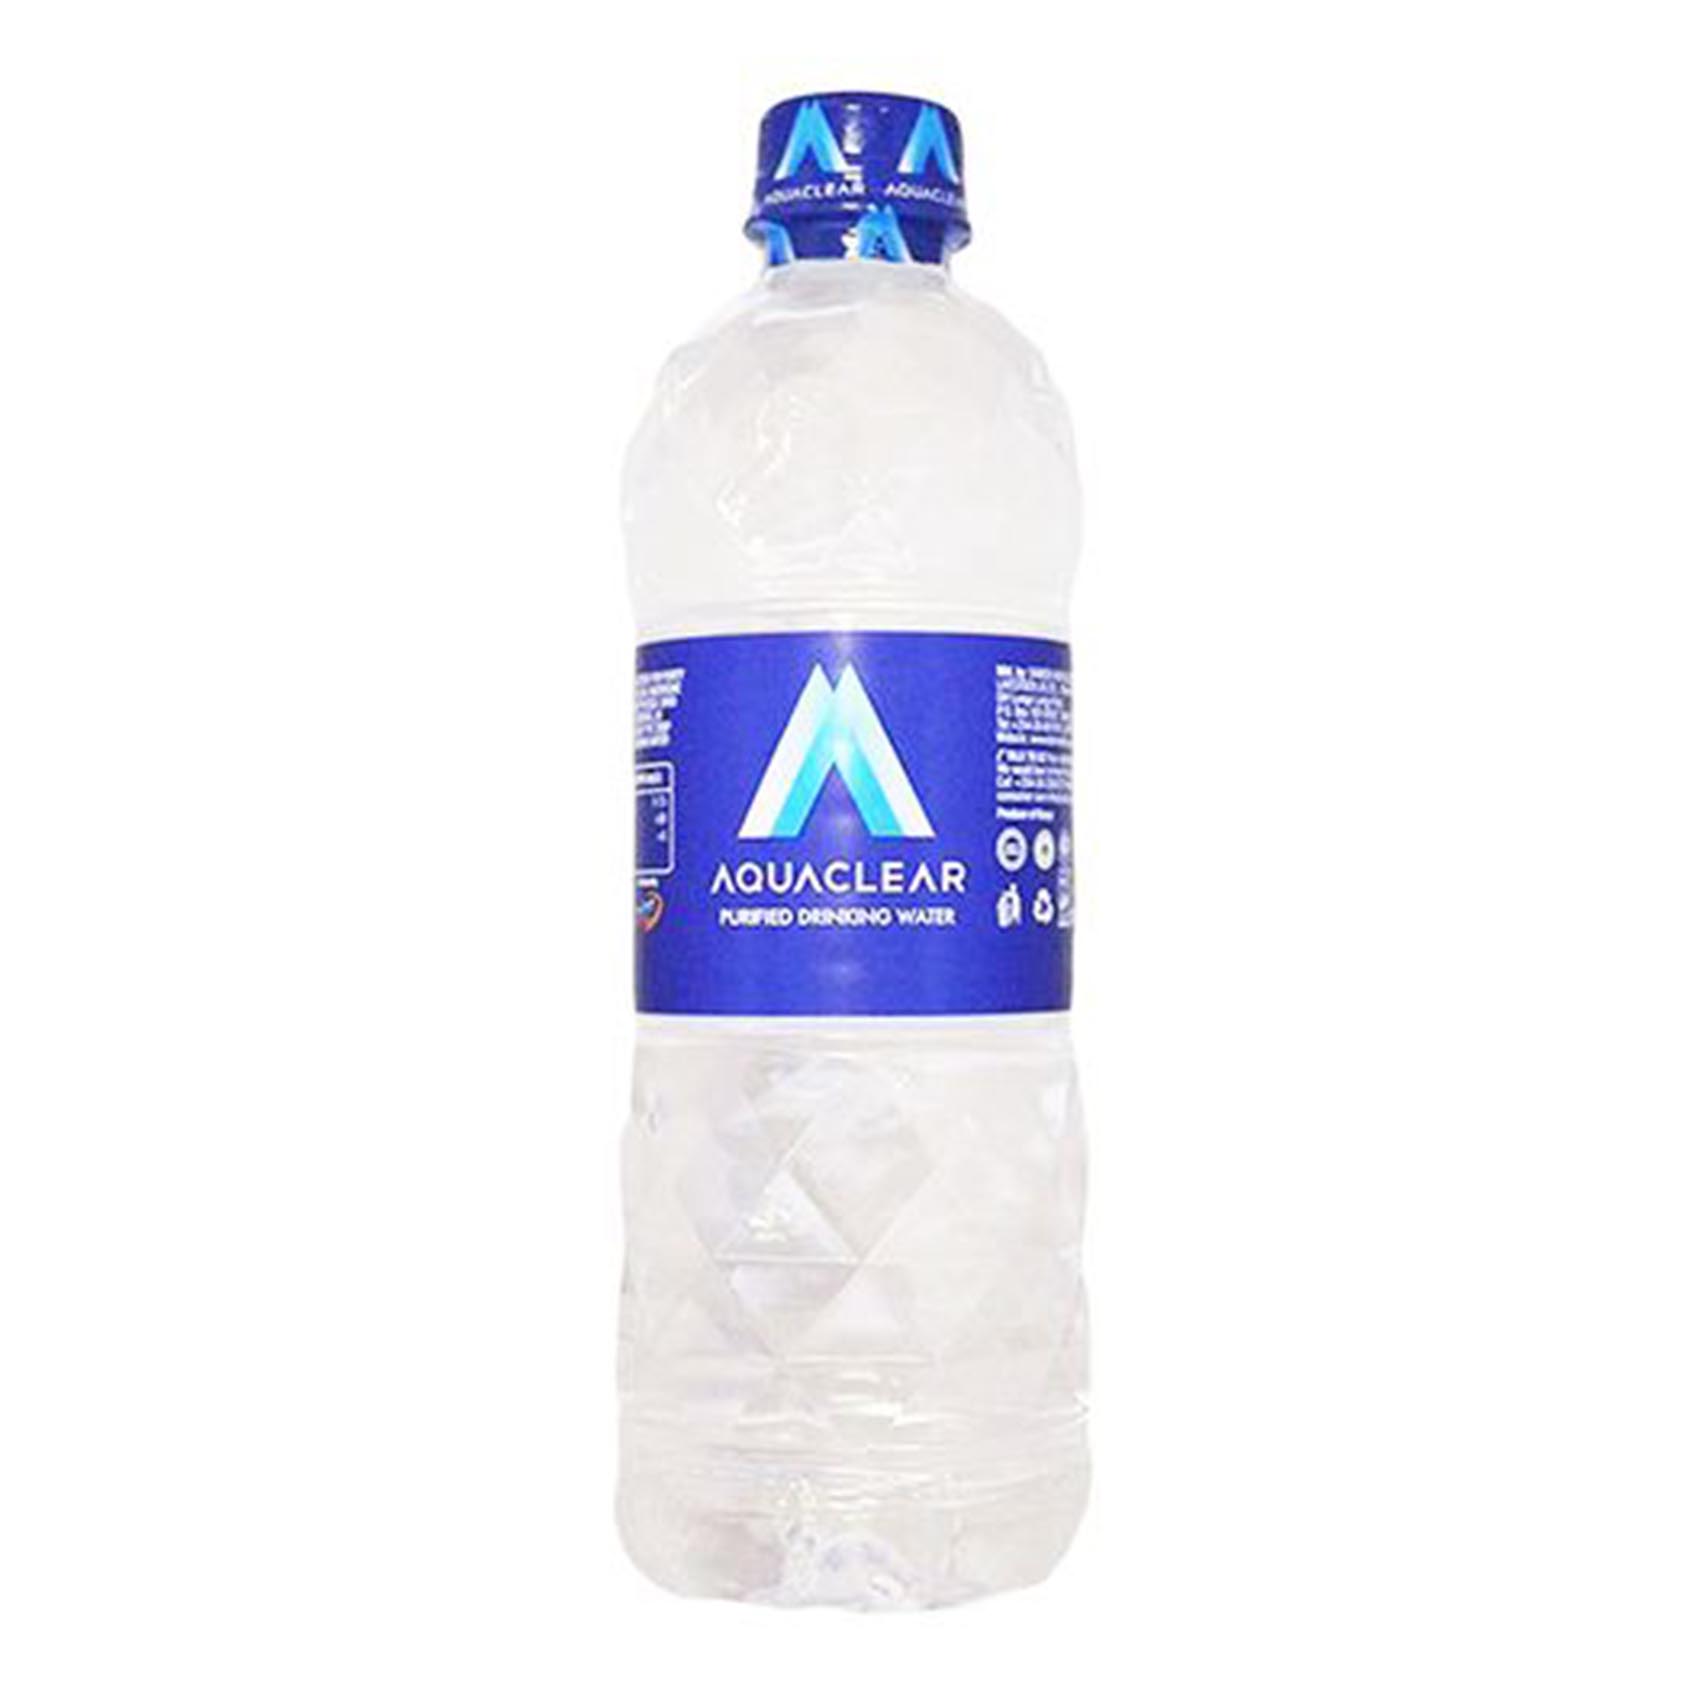 Aquaclear Purified Drinking Water 500ml